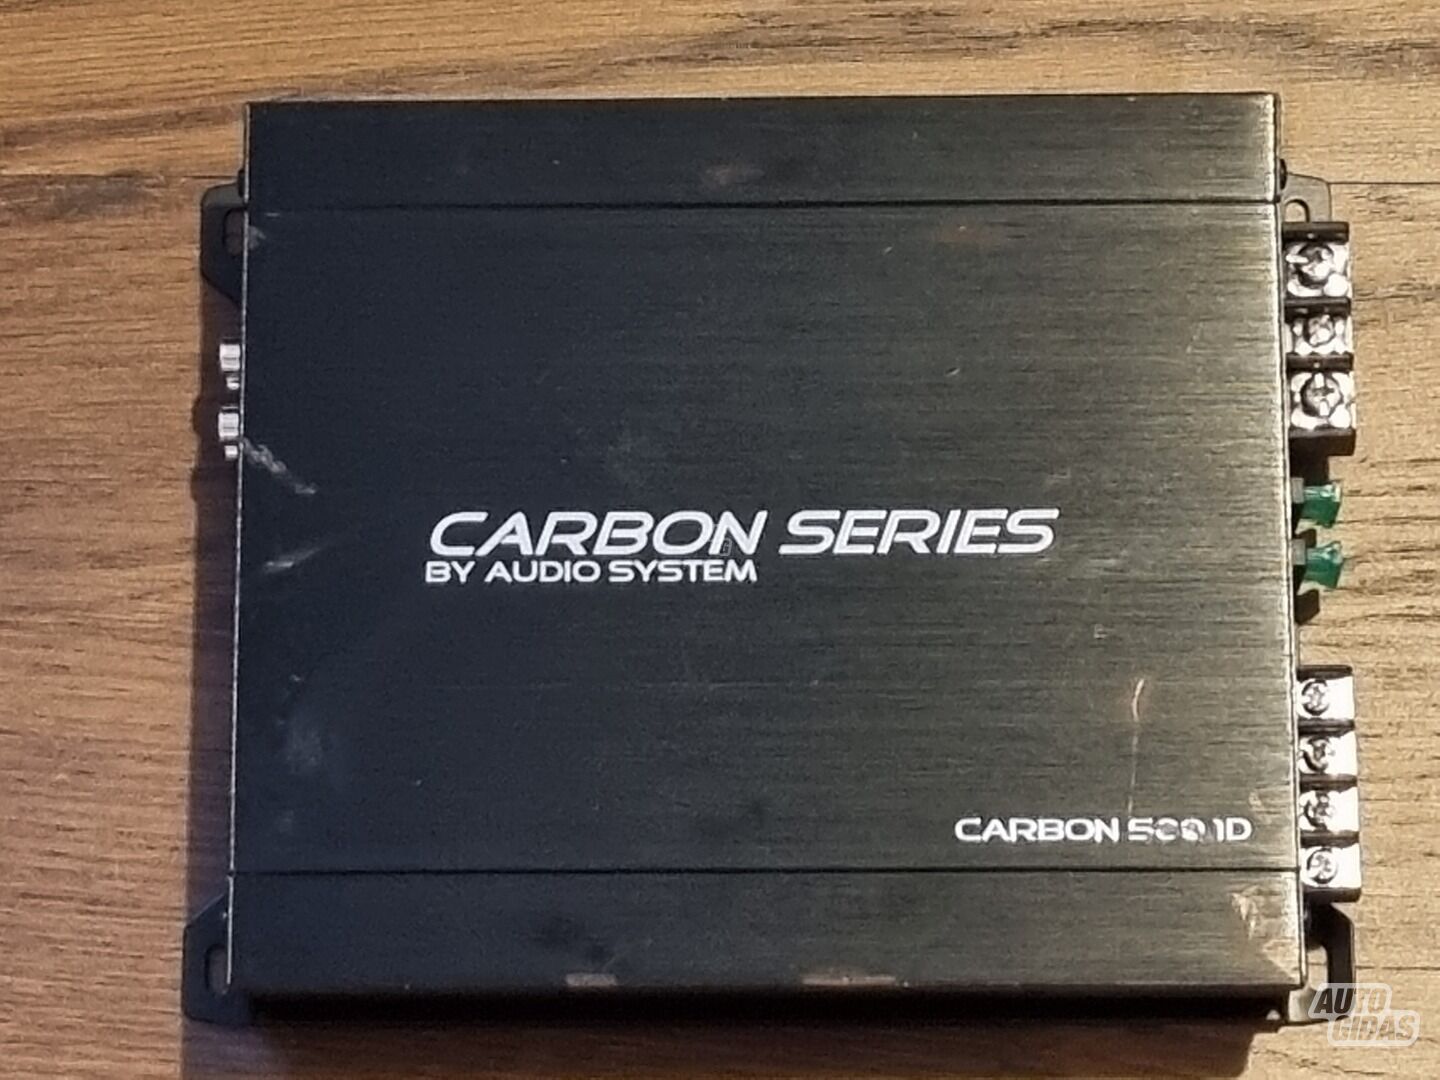 Audio system Carbon 500.1D Усилитель